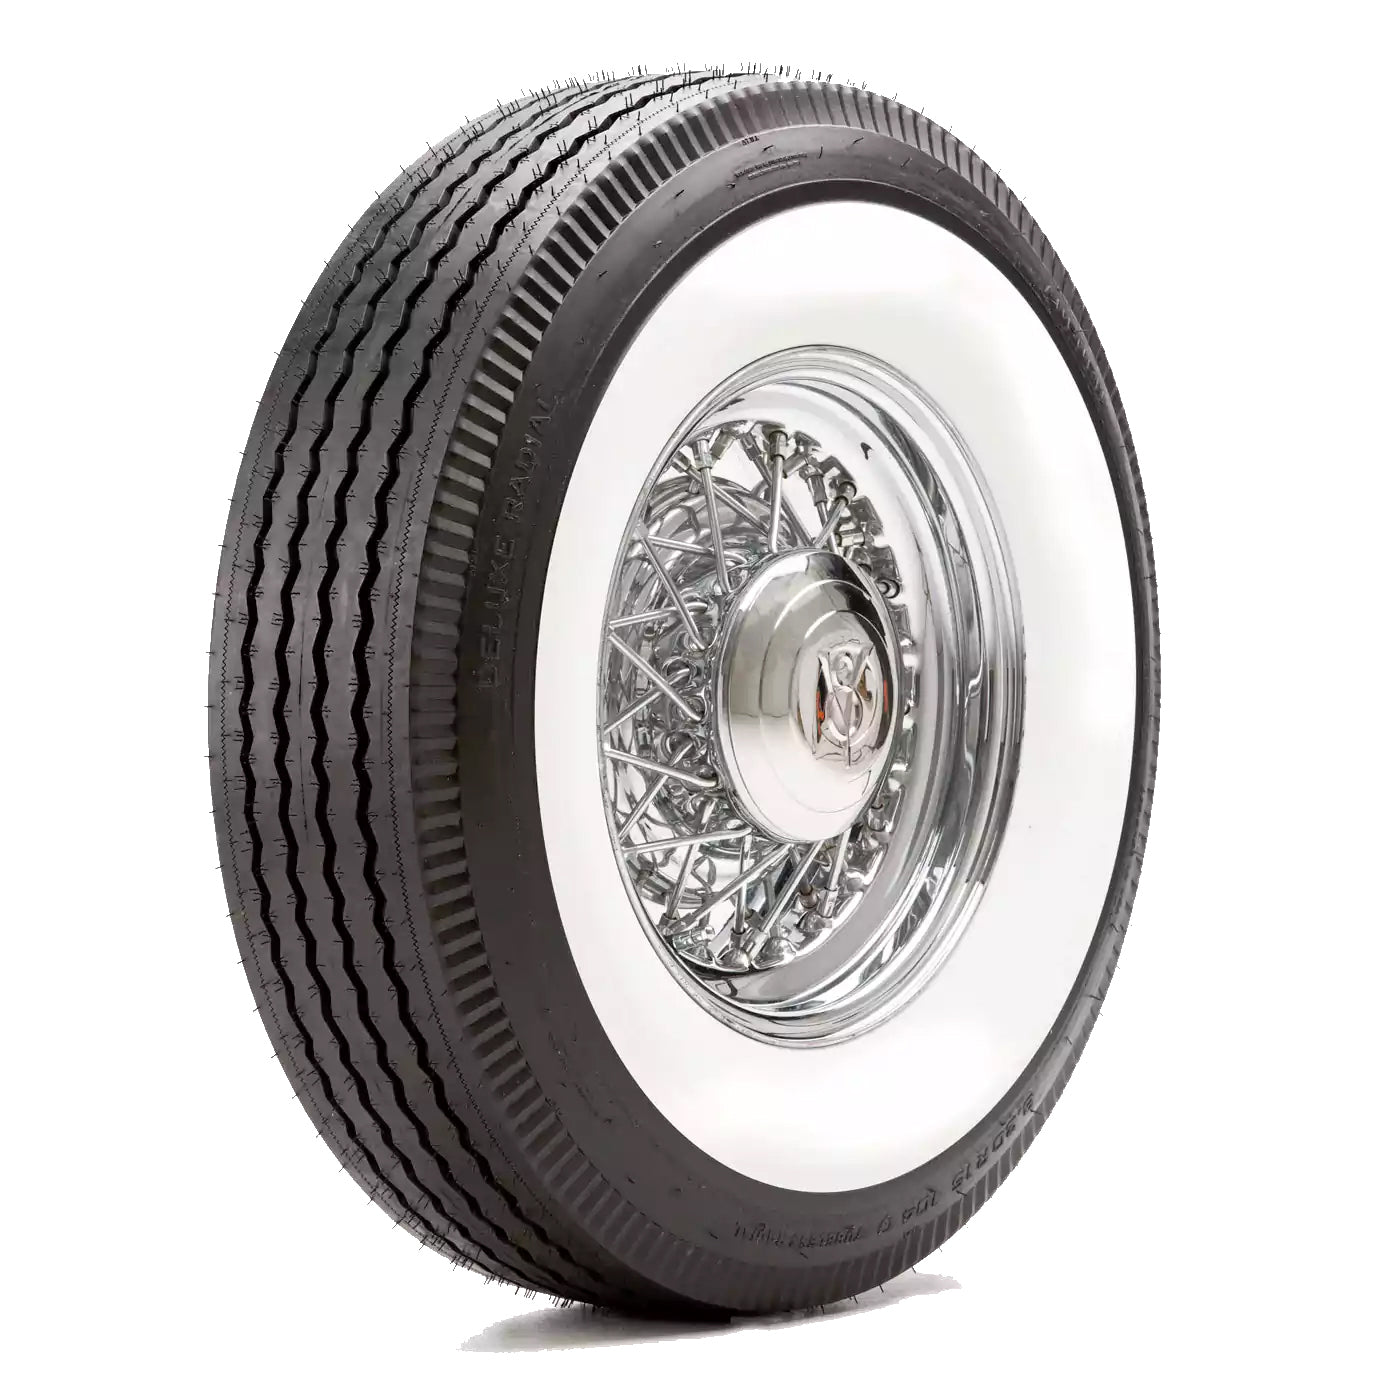 Auburn Radial 3 1/4" Whitewall Tyre - 650R16